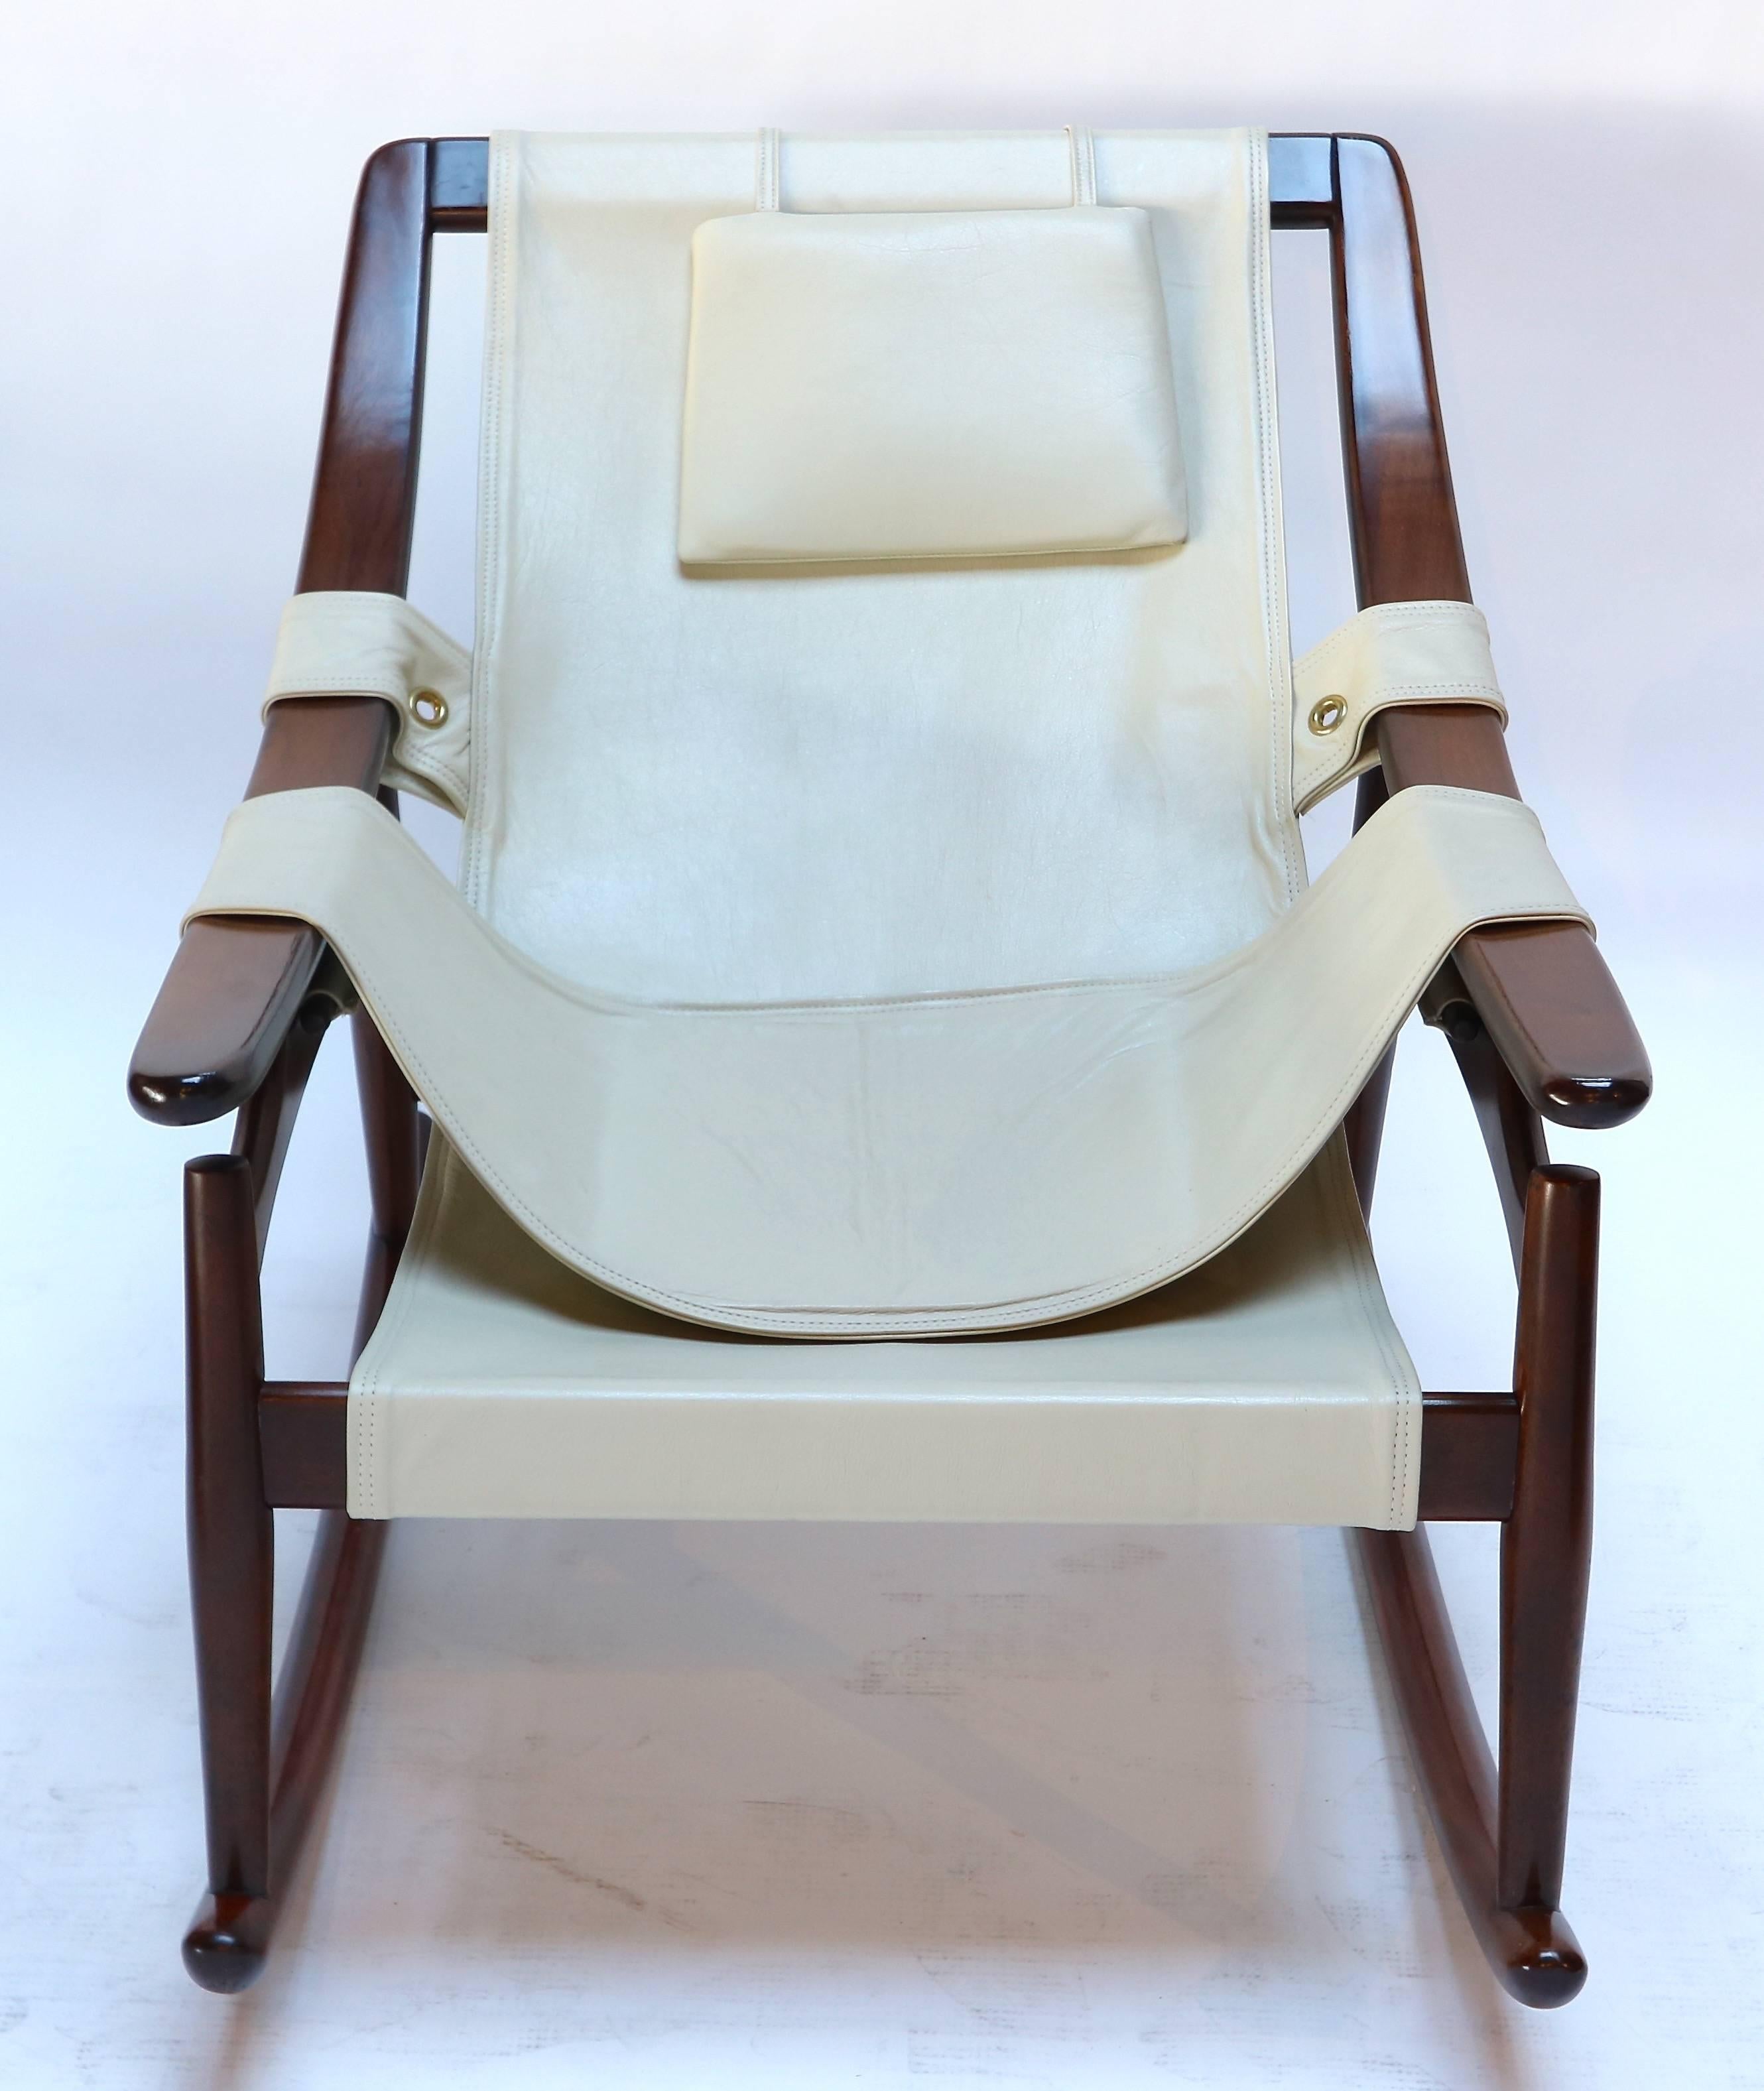 1960s Brazilian jacaranda wood rocking chair upholstered in beige leather by Liceu de Artes e Ofícios, Sao Paulo, Brazil.